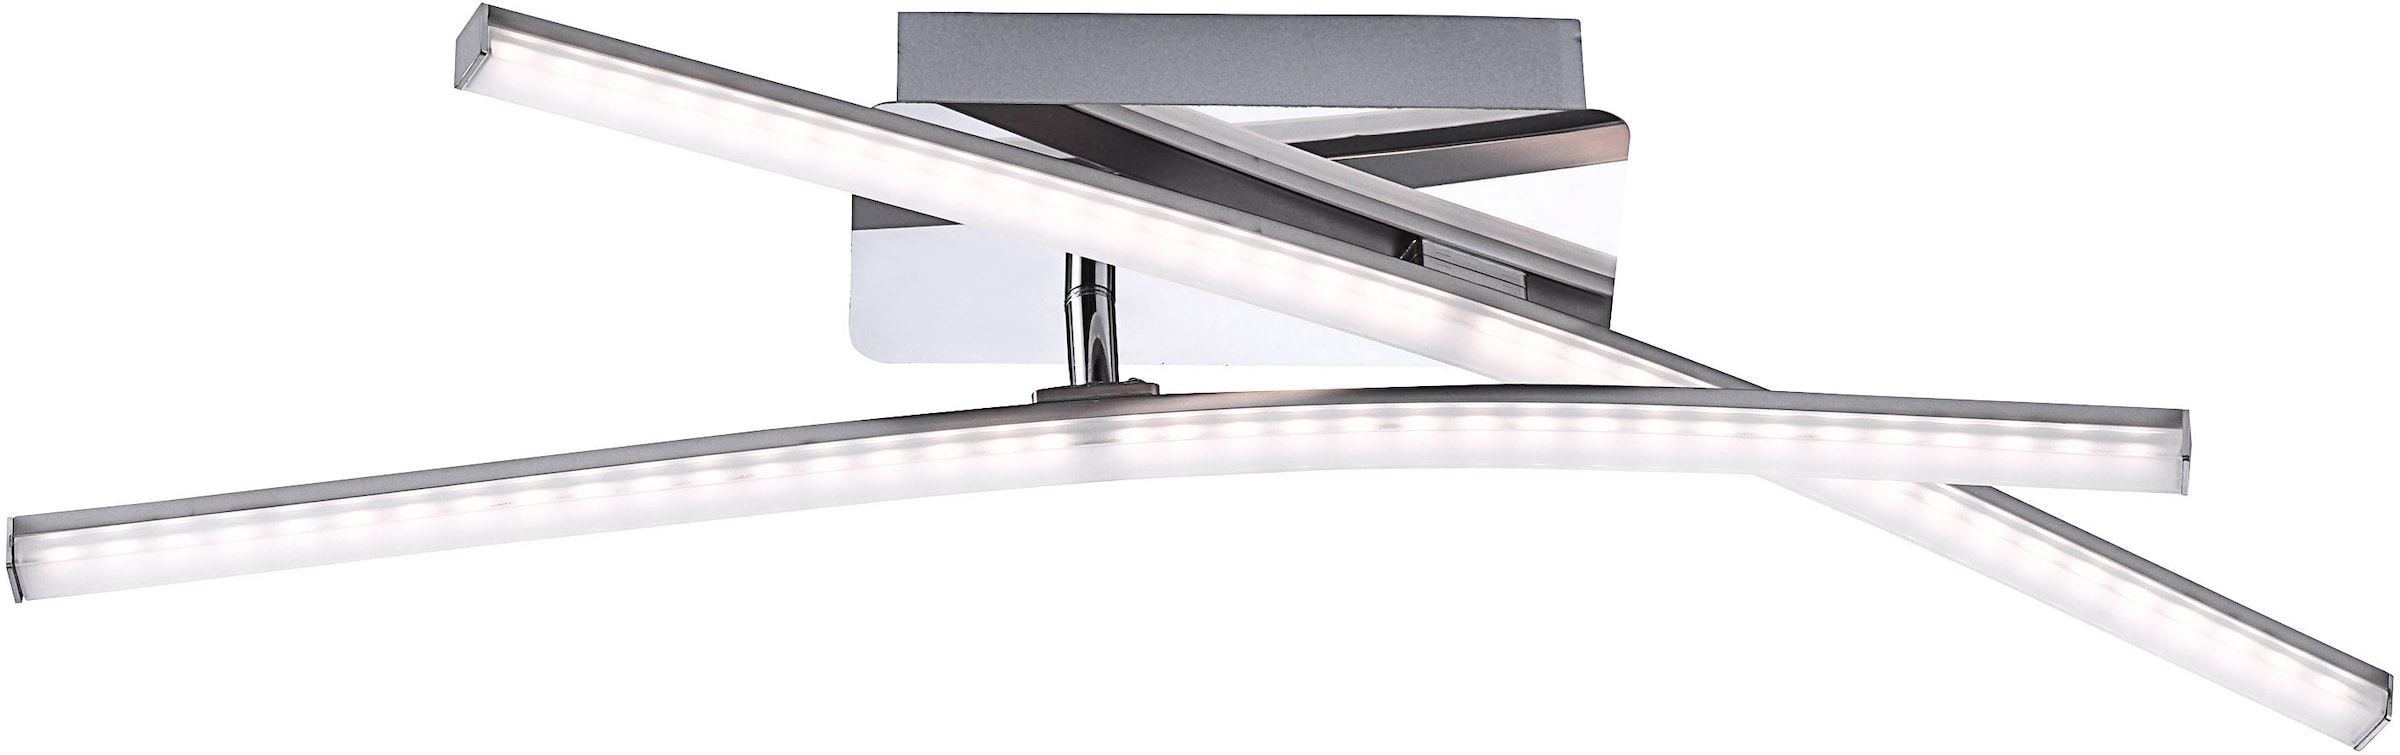 JUST LIGHT LED Deckenleuchte OTTO »SIMON«, LED Deckenlampe Shop 2 Online im flammig-flammig